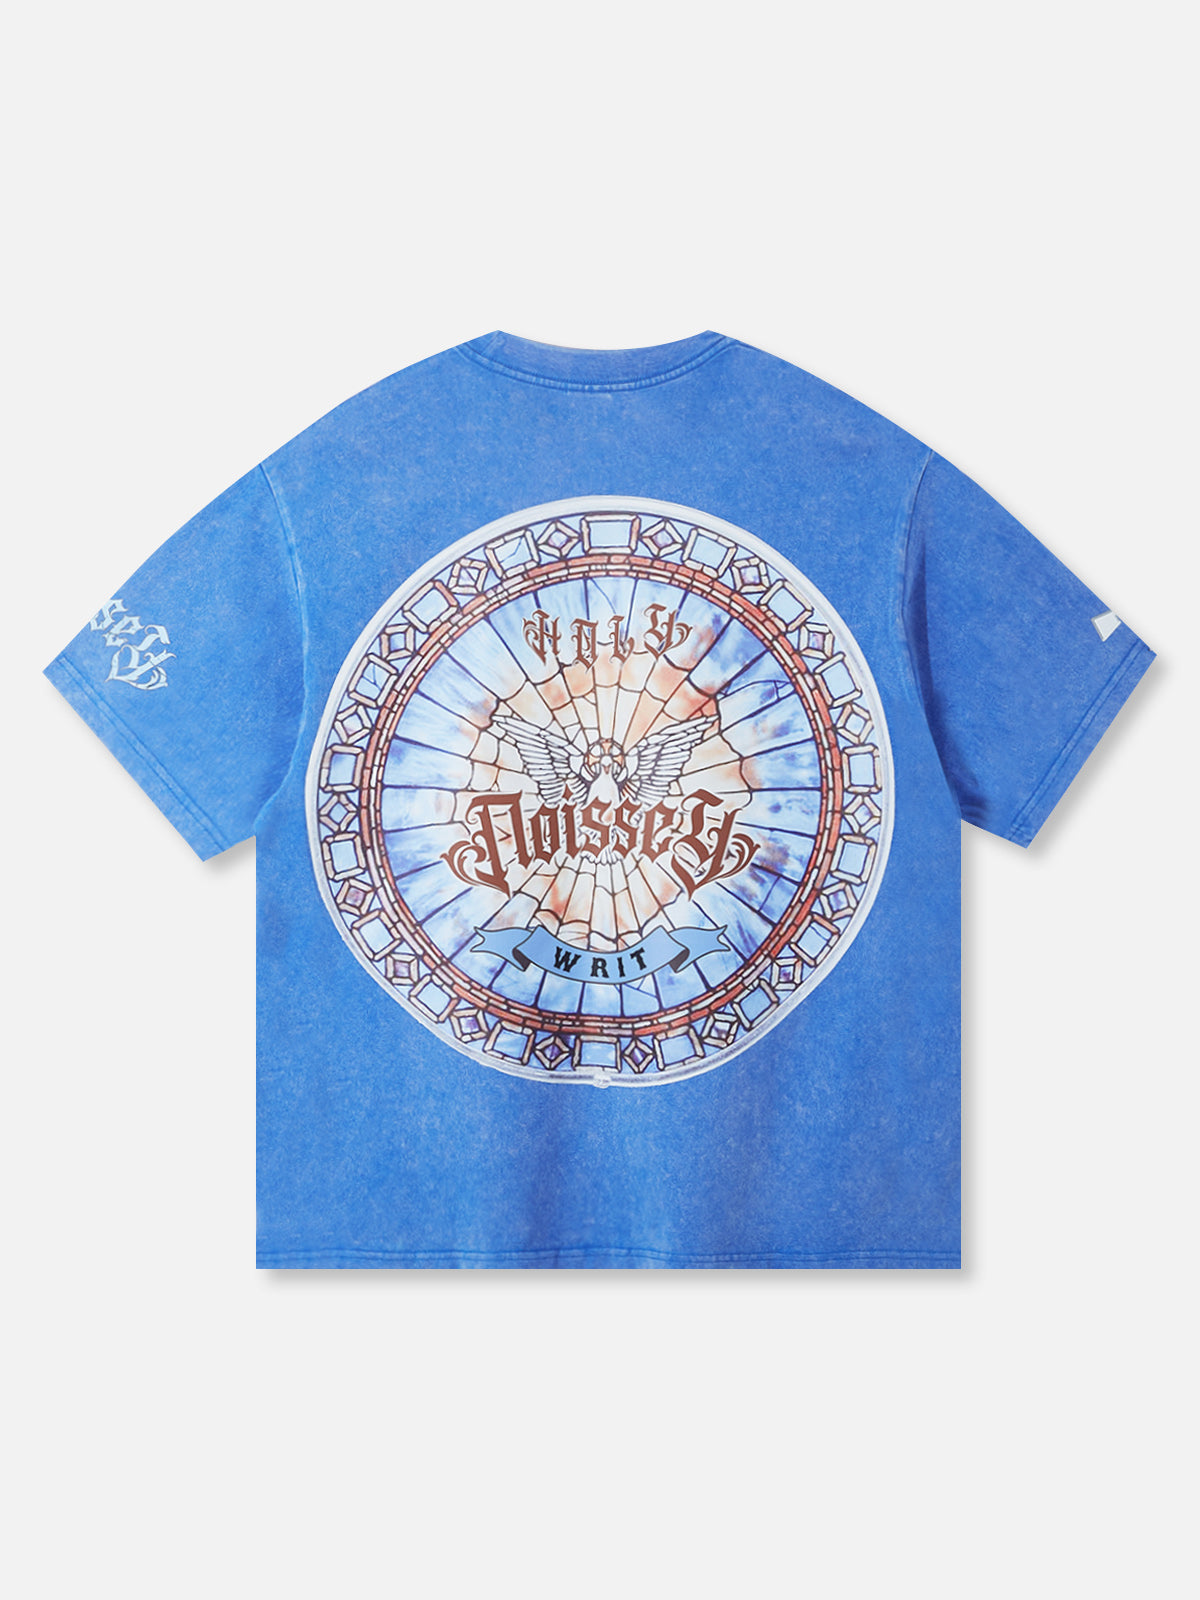 HINDERNISSE &amp; GEFAHREN© Ozeanblaues Buntglas-T-Shirt